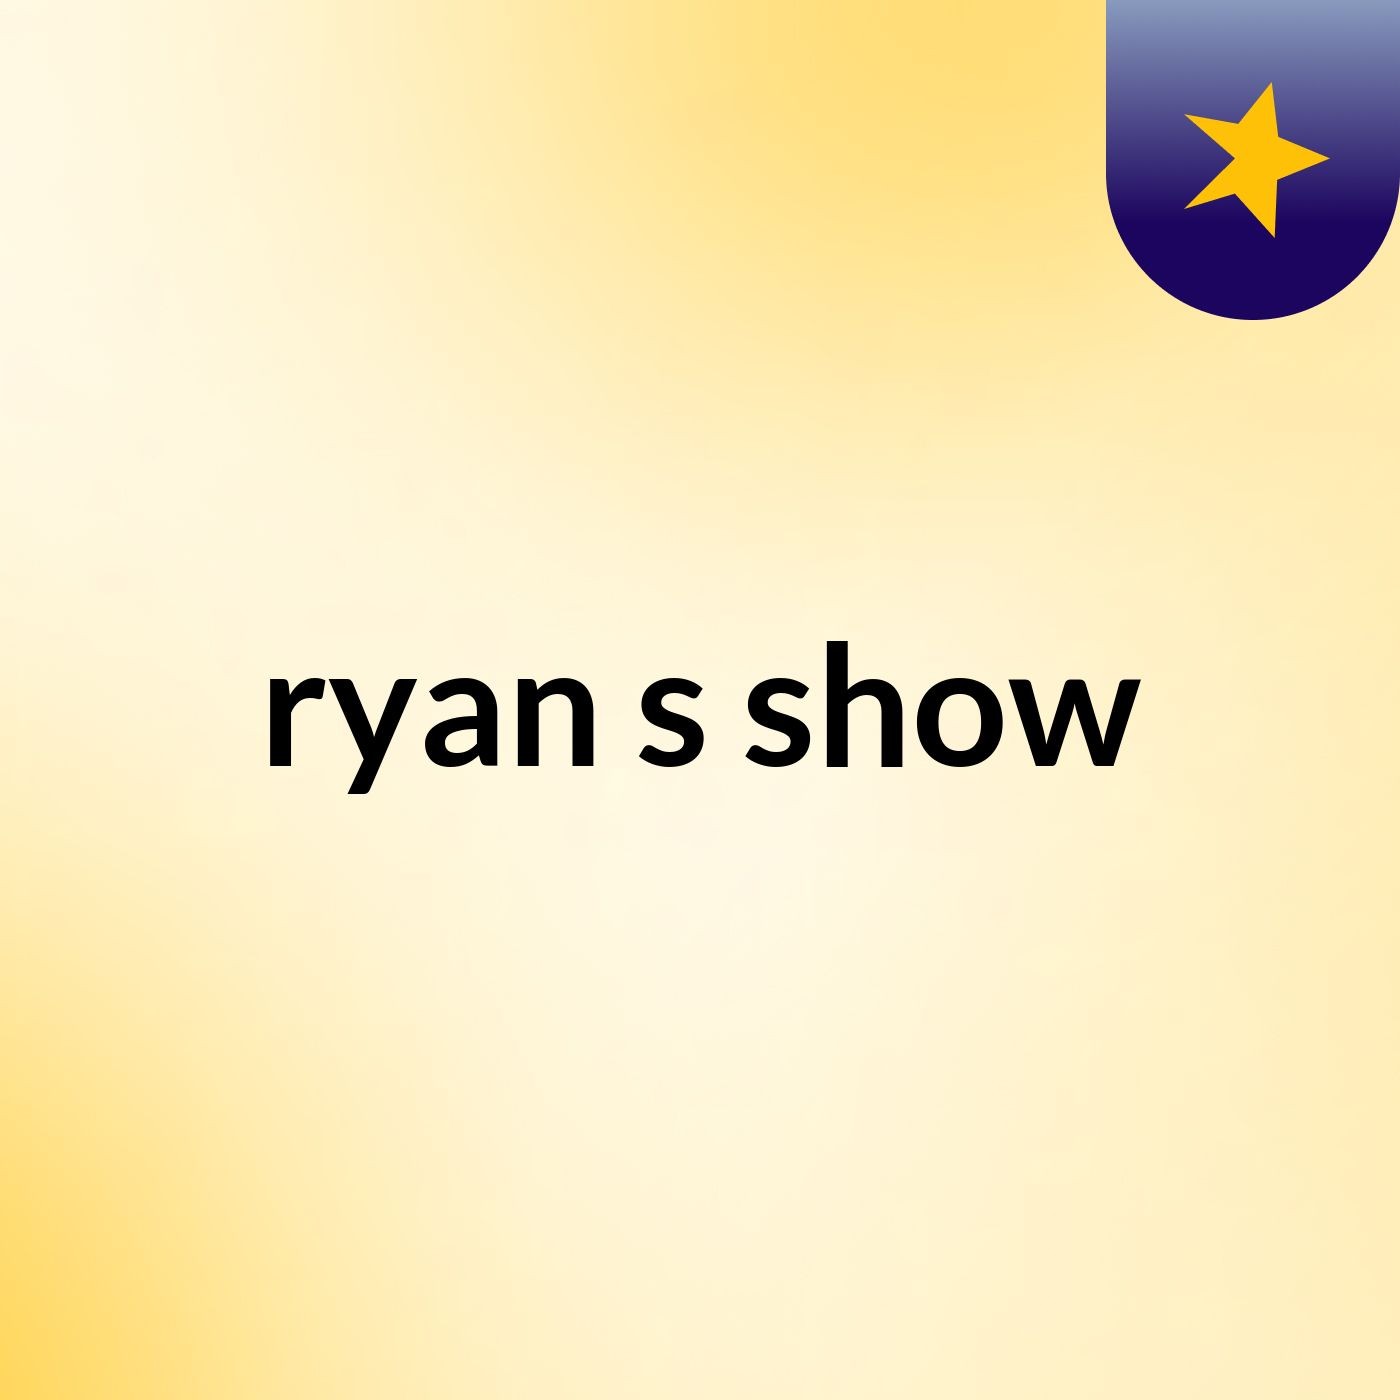 ryan's show